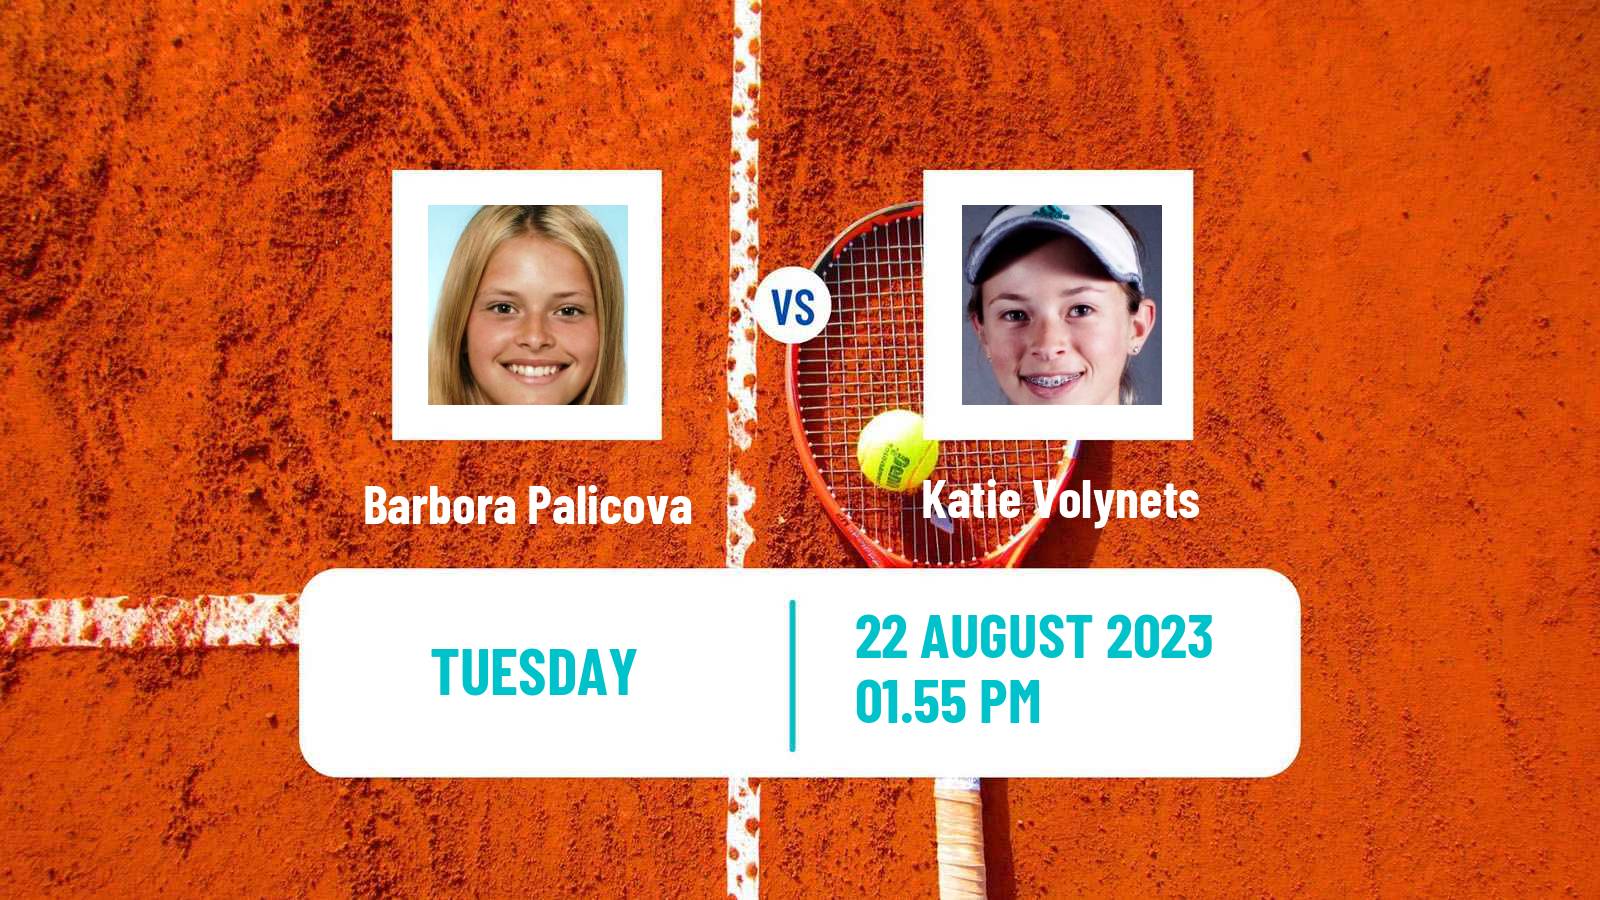 Tennis WTA US Open Barbora Palicova - Katie Volynets